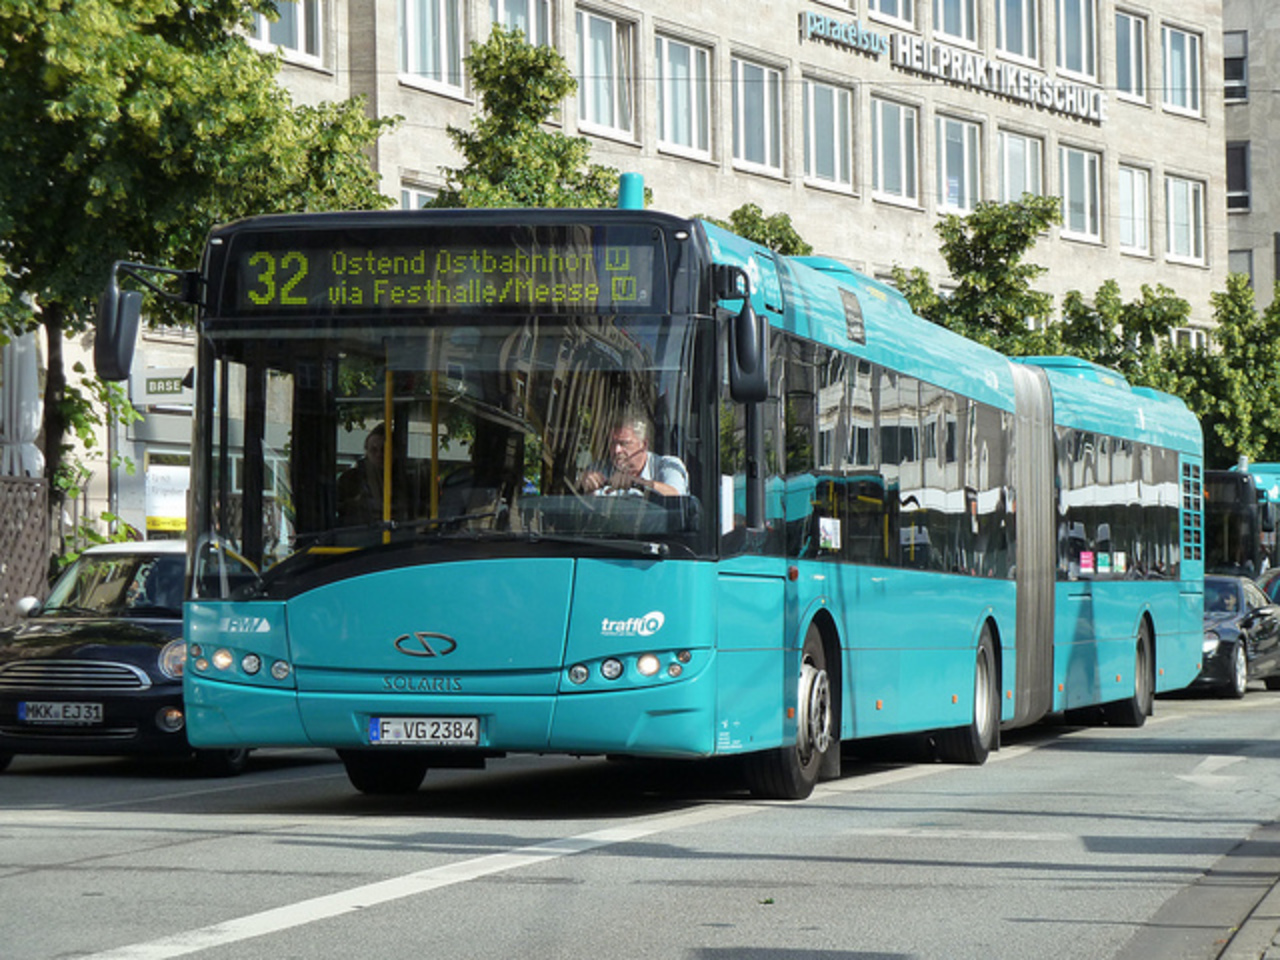 VGF Frankfurt am Main - Solaris Urbino 12 - (F-VG 2384) | Flickr ...